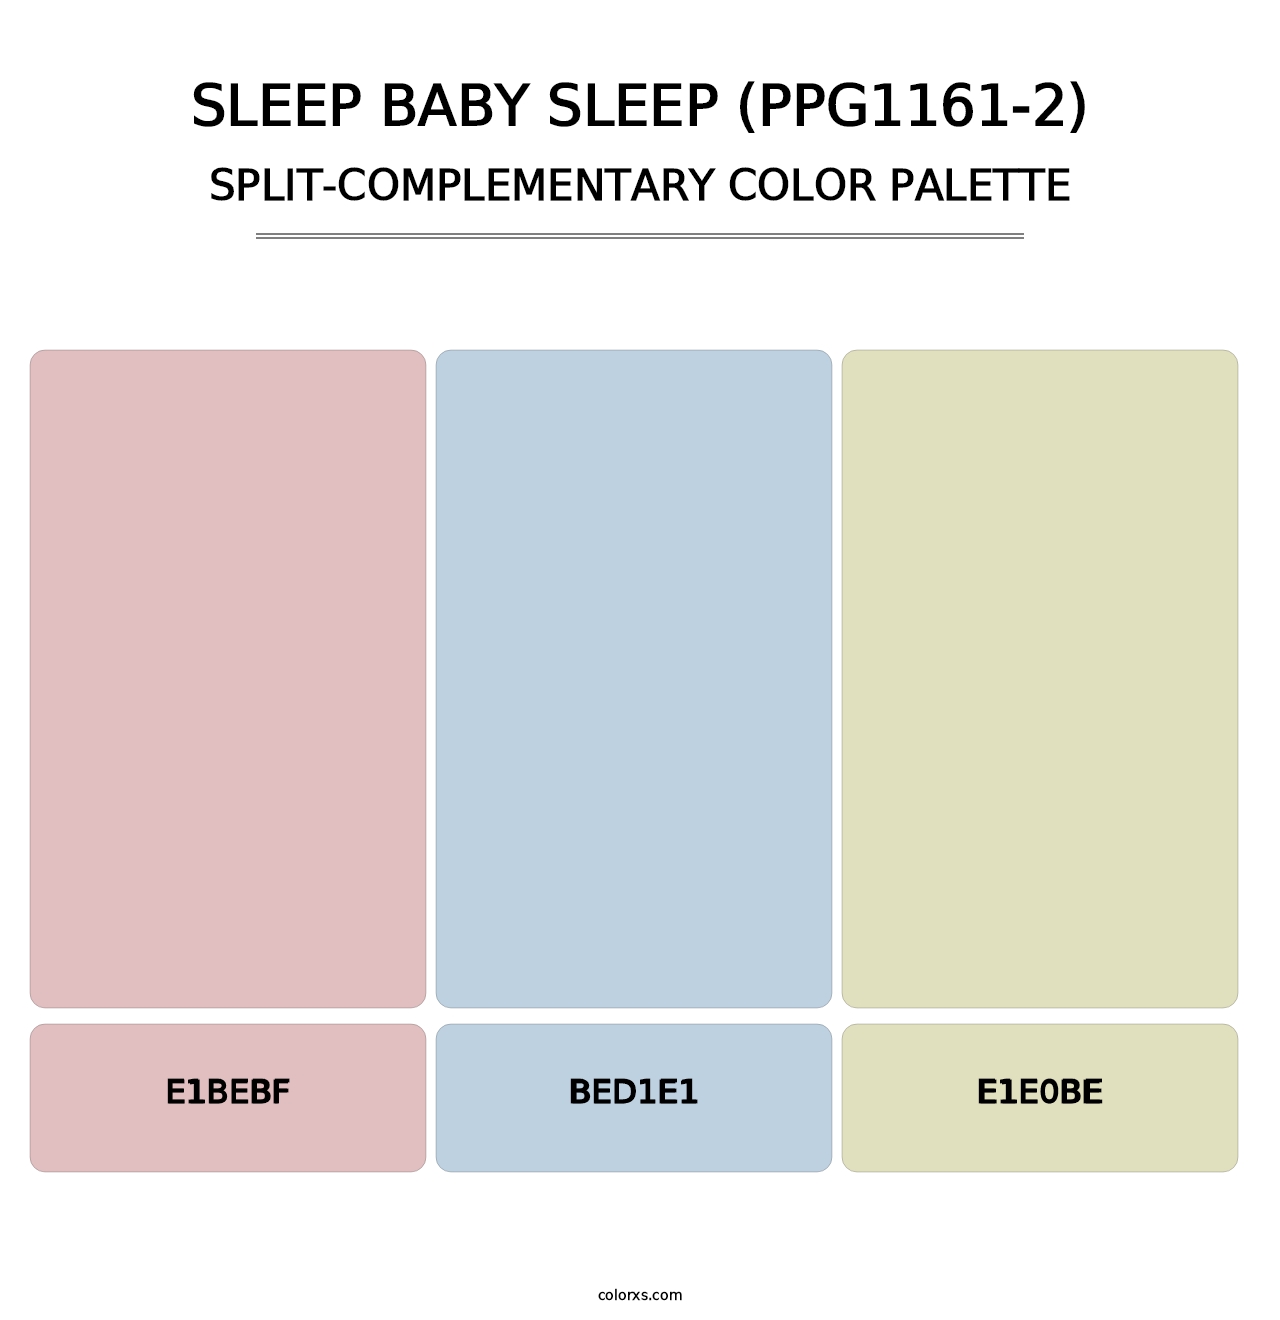 Sleep Baby Sleep (PPG1161-2) - Split-Complementary Color Palette